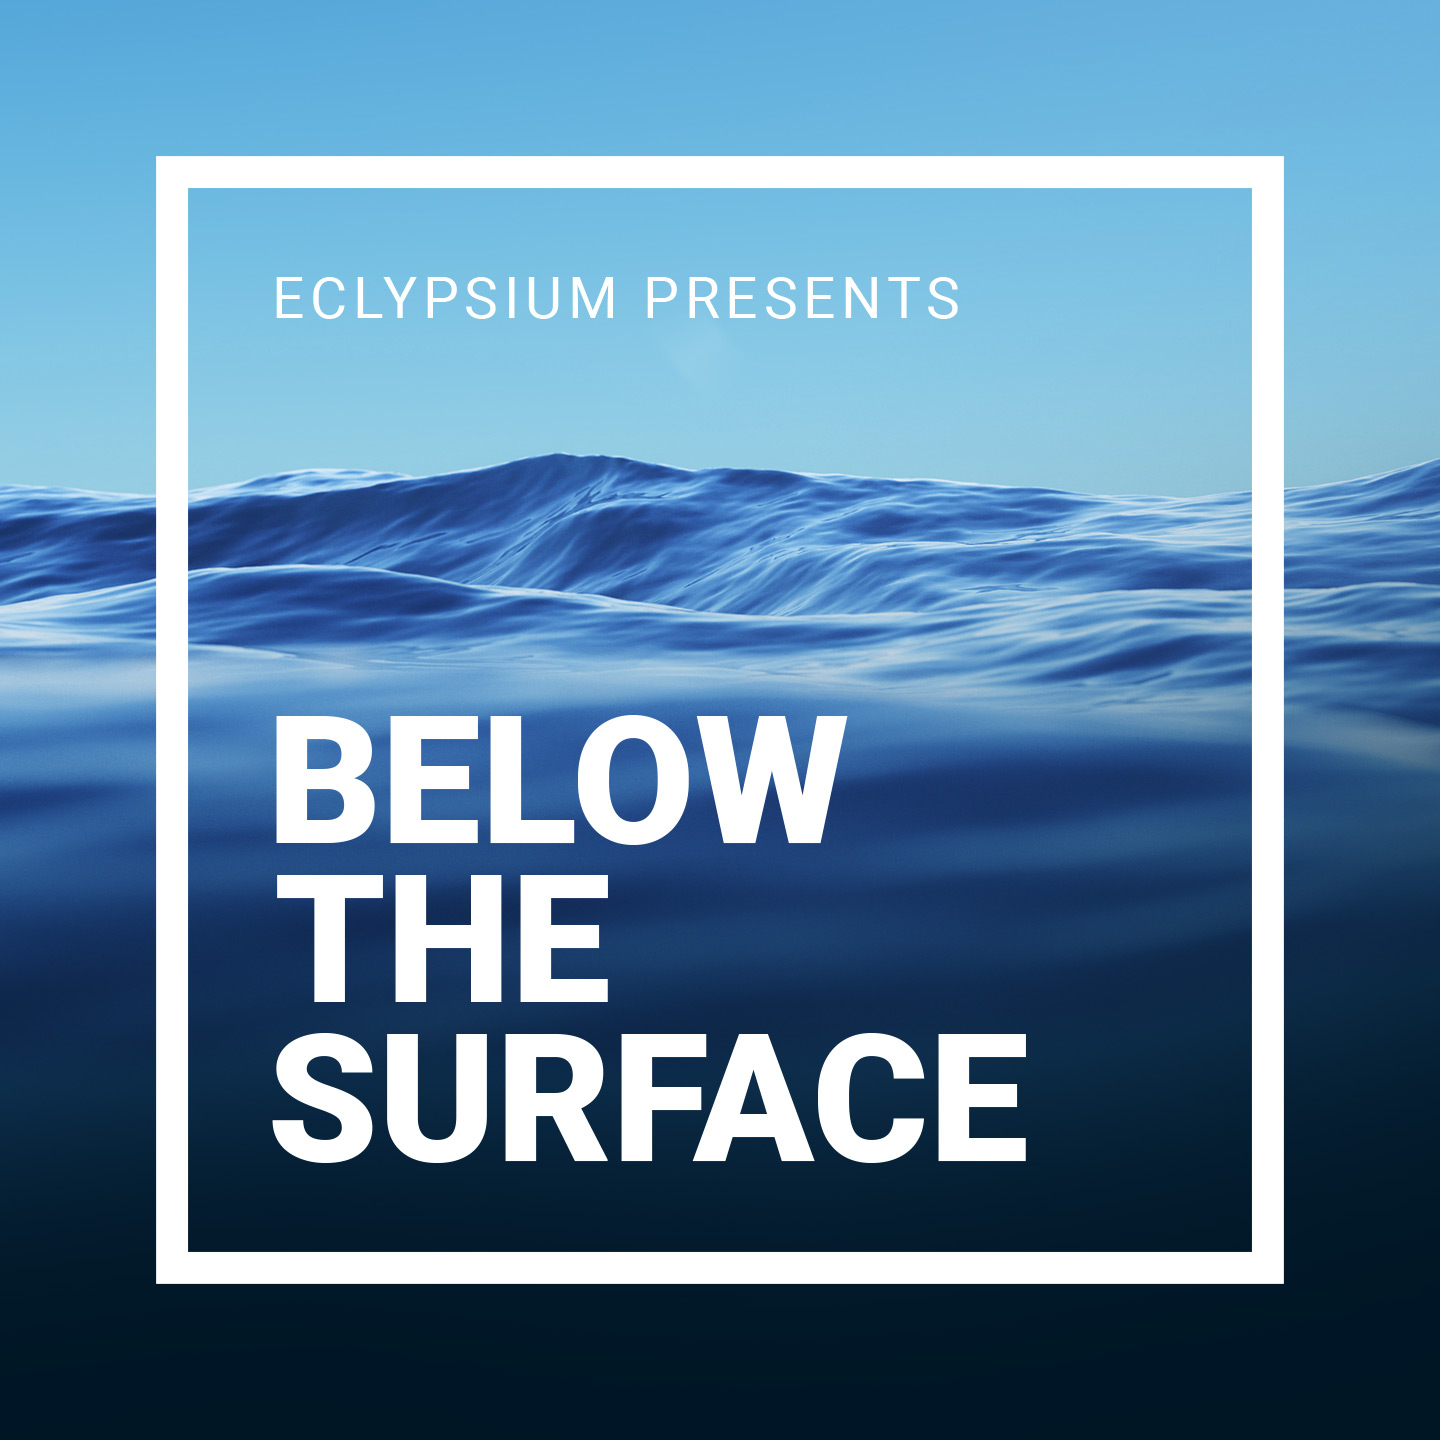 Eclypsium presents Below The Surface text on top of ocean waves